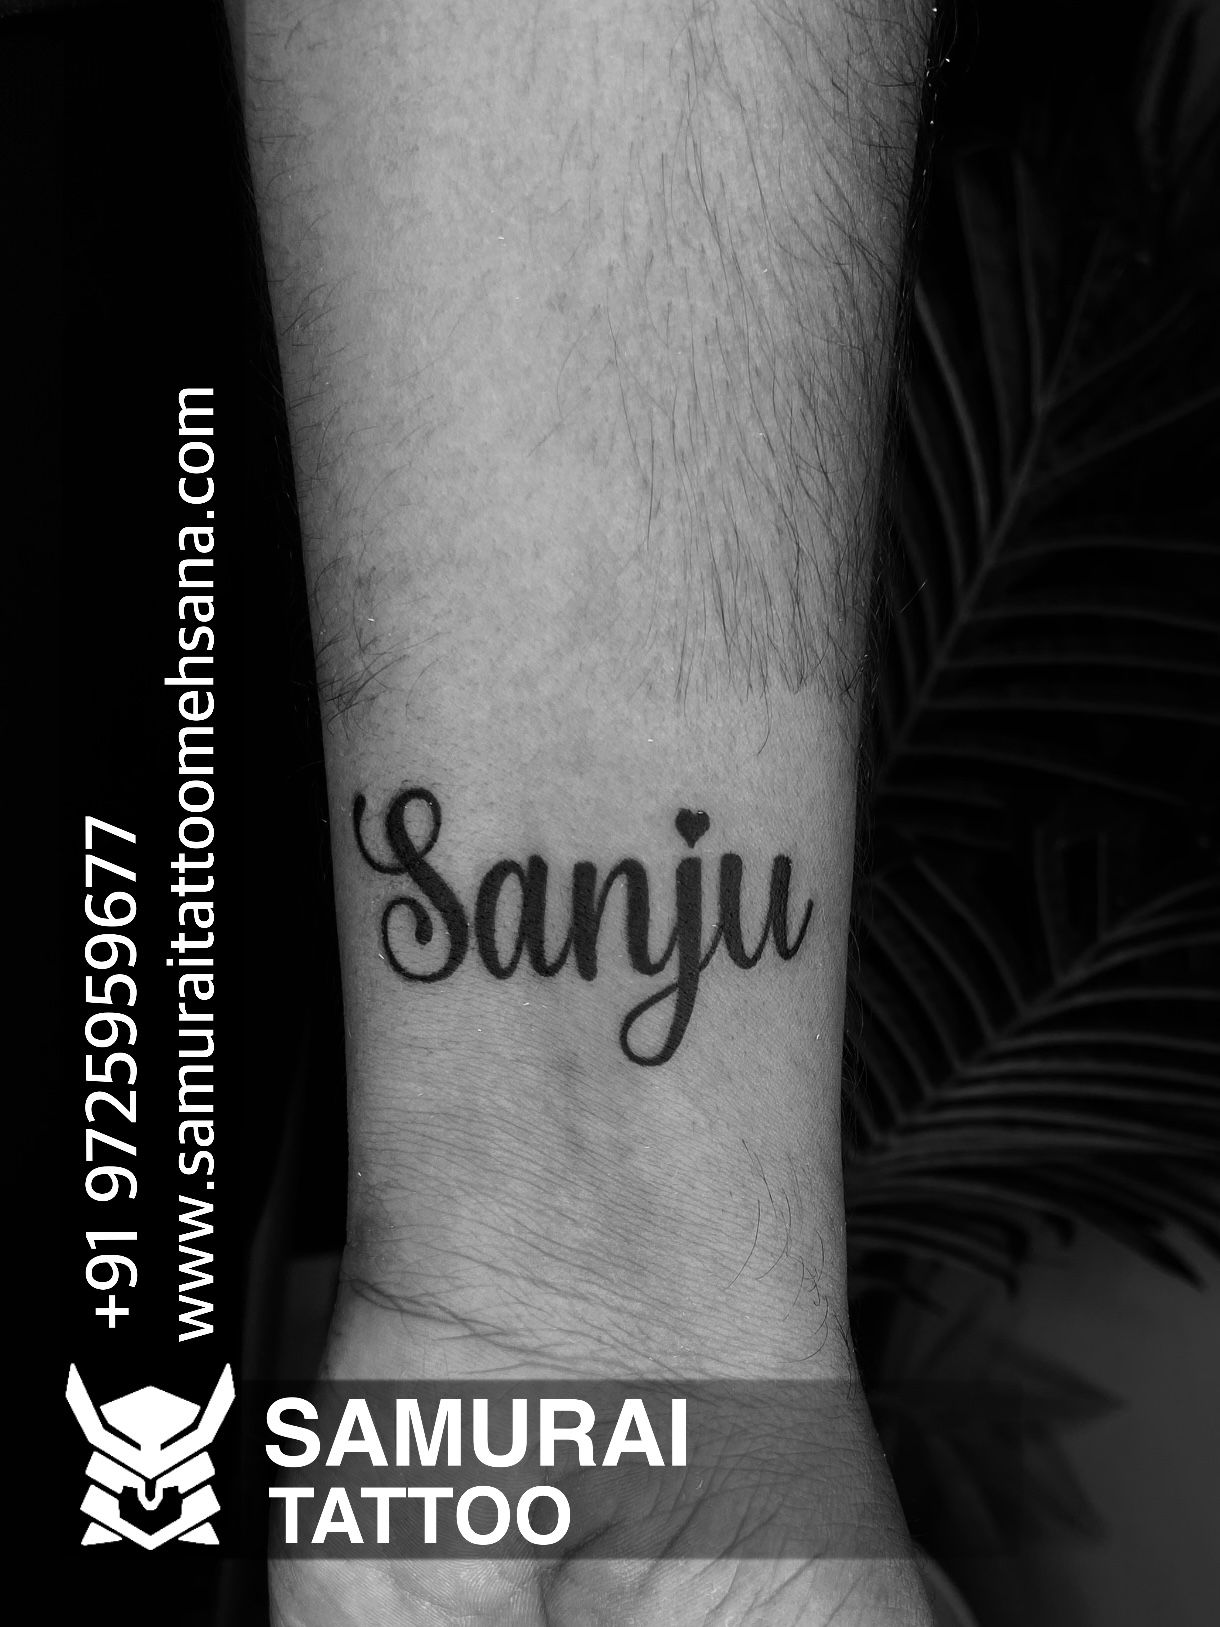 Shiva Tattoo Studio   2 in 1 name and and sanju name tattoo  shivatattoostudio 7778087786  Facebook